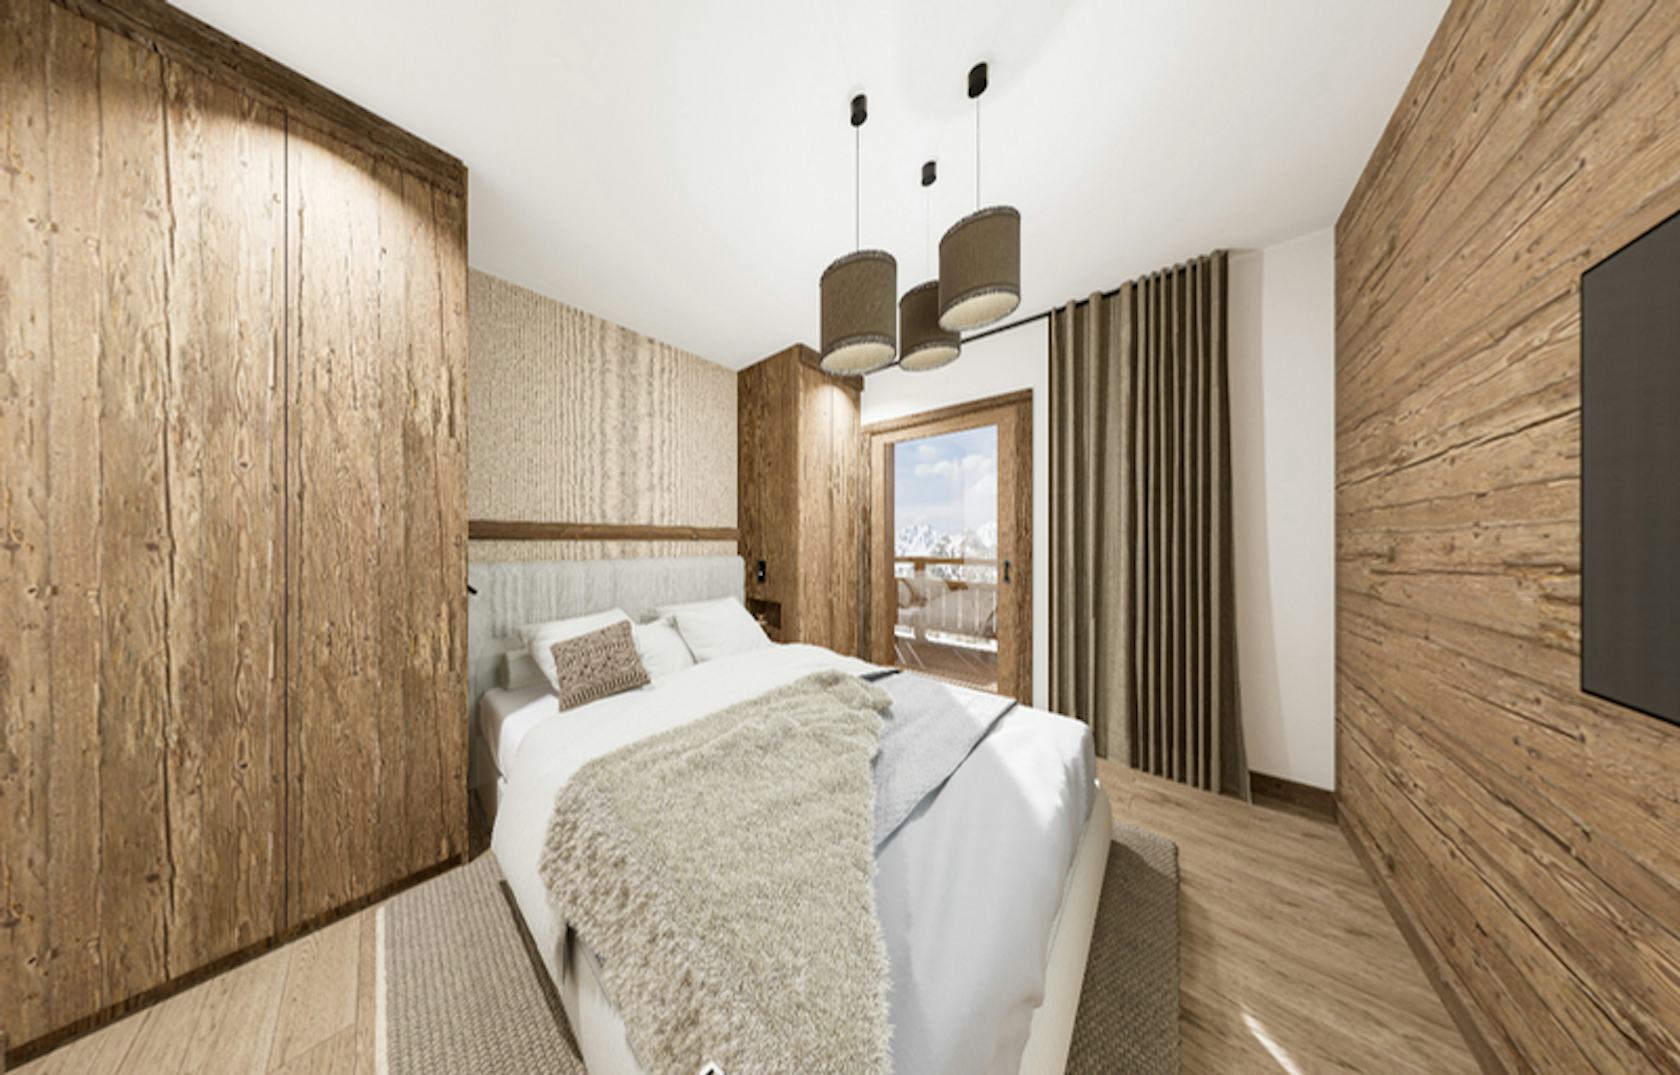 indoors interior design wood panels bed furniture